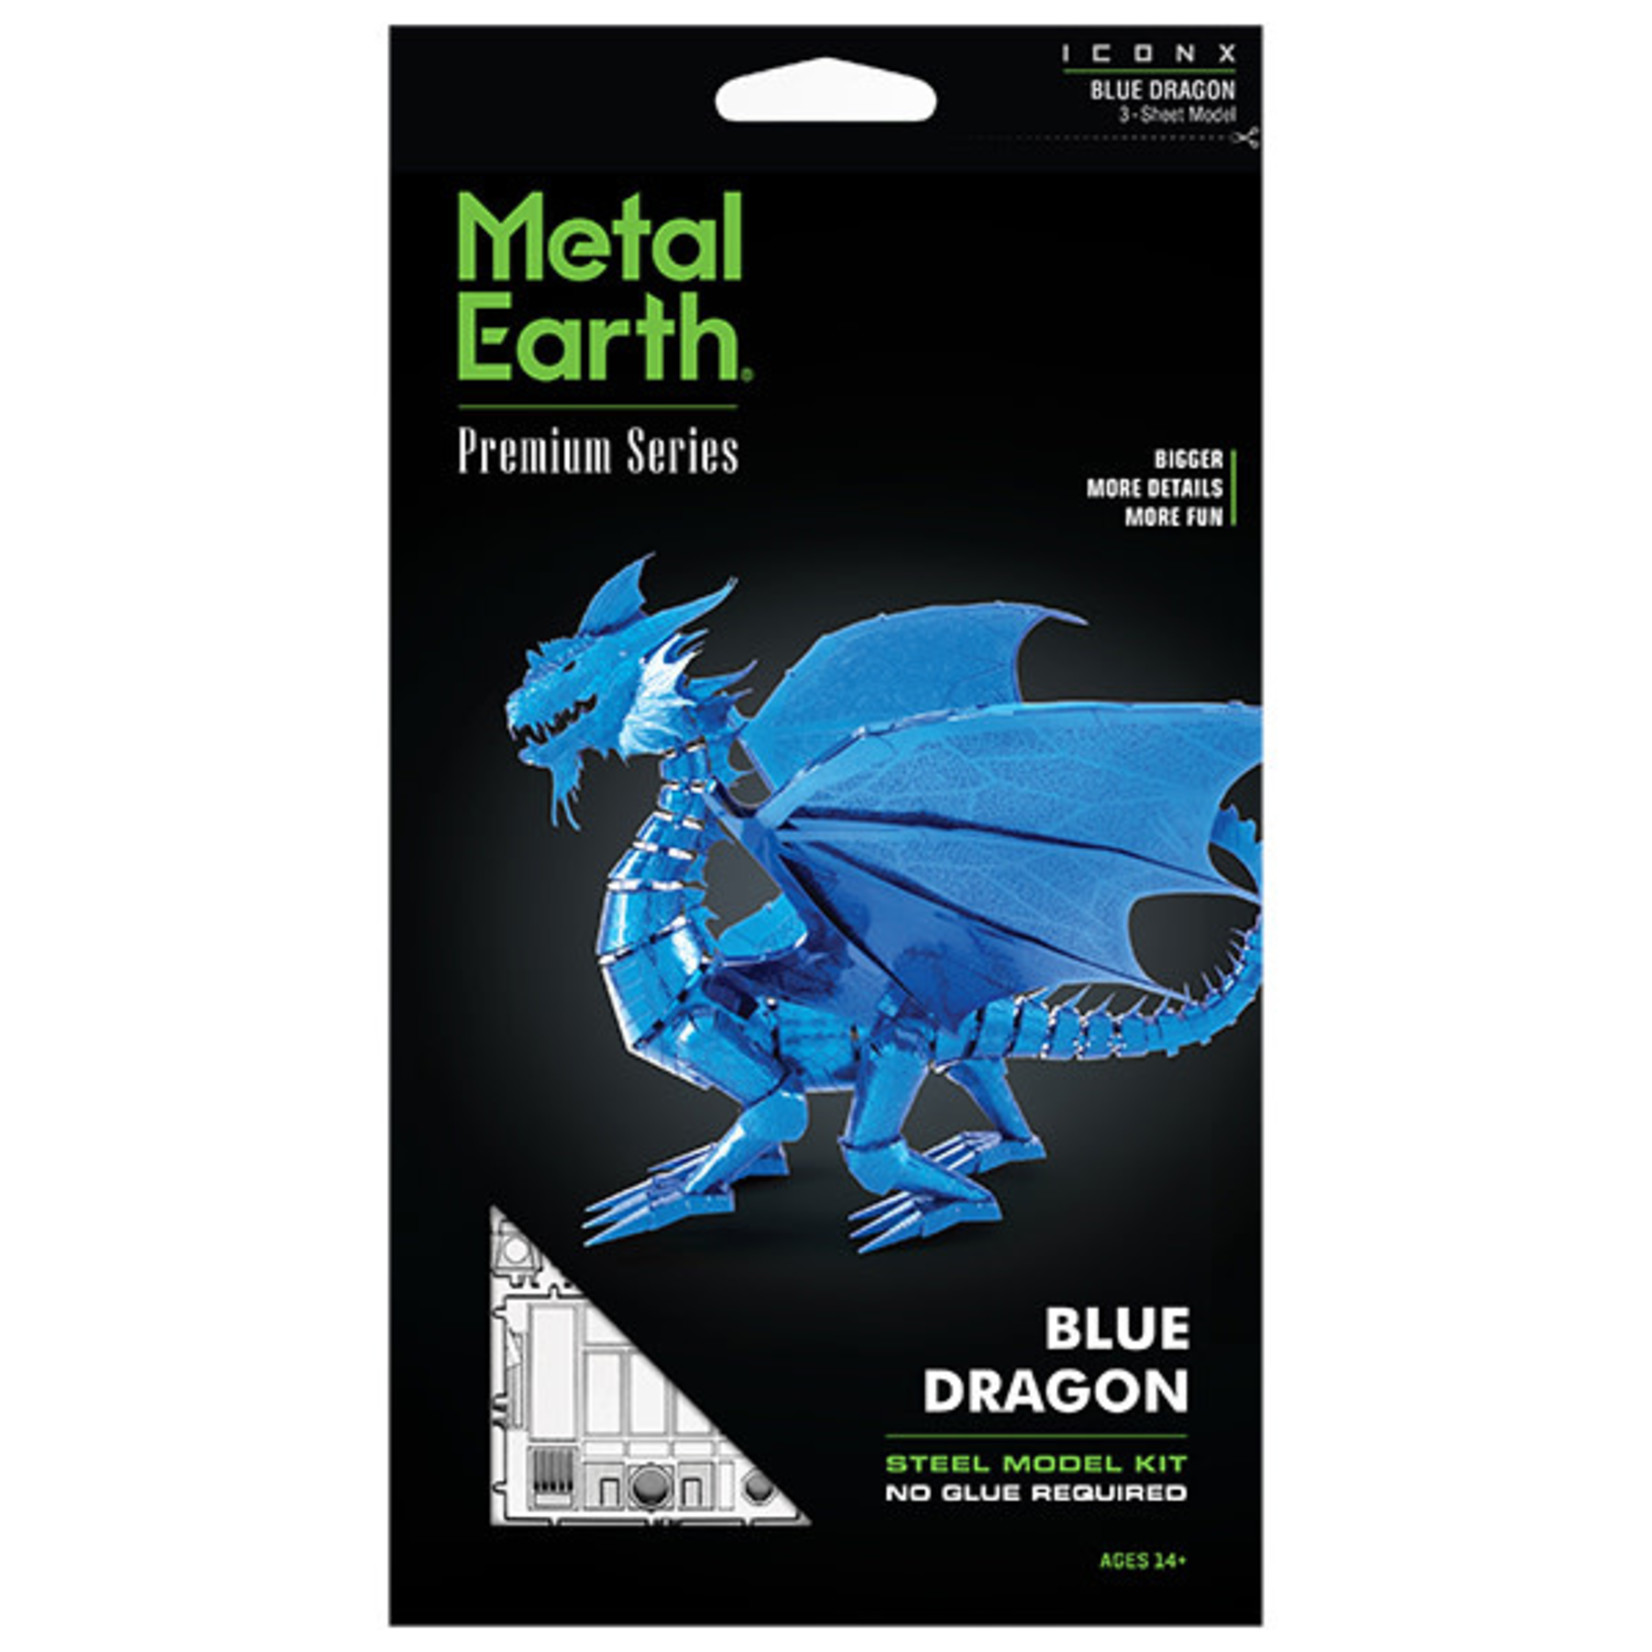 Metal Earth Metal Earth Premium Series - Blue Dragon